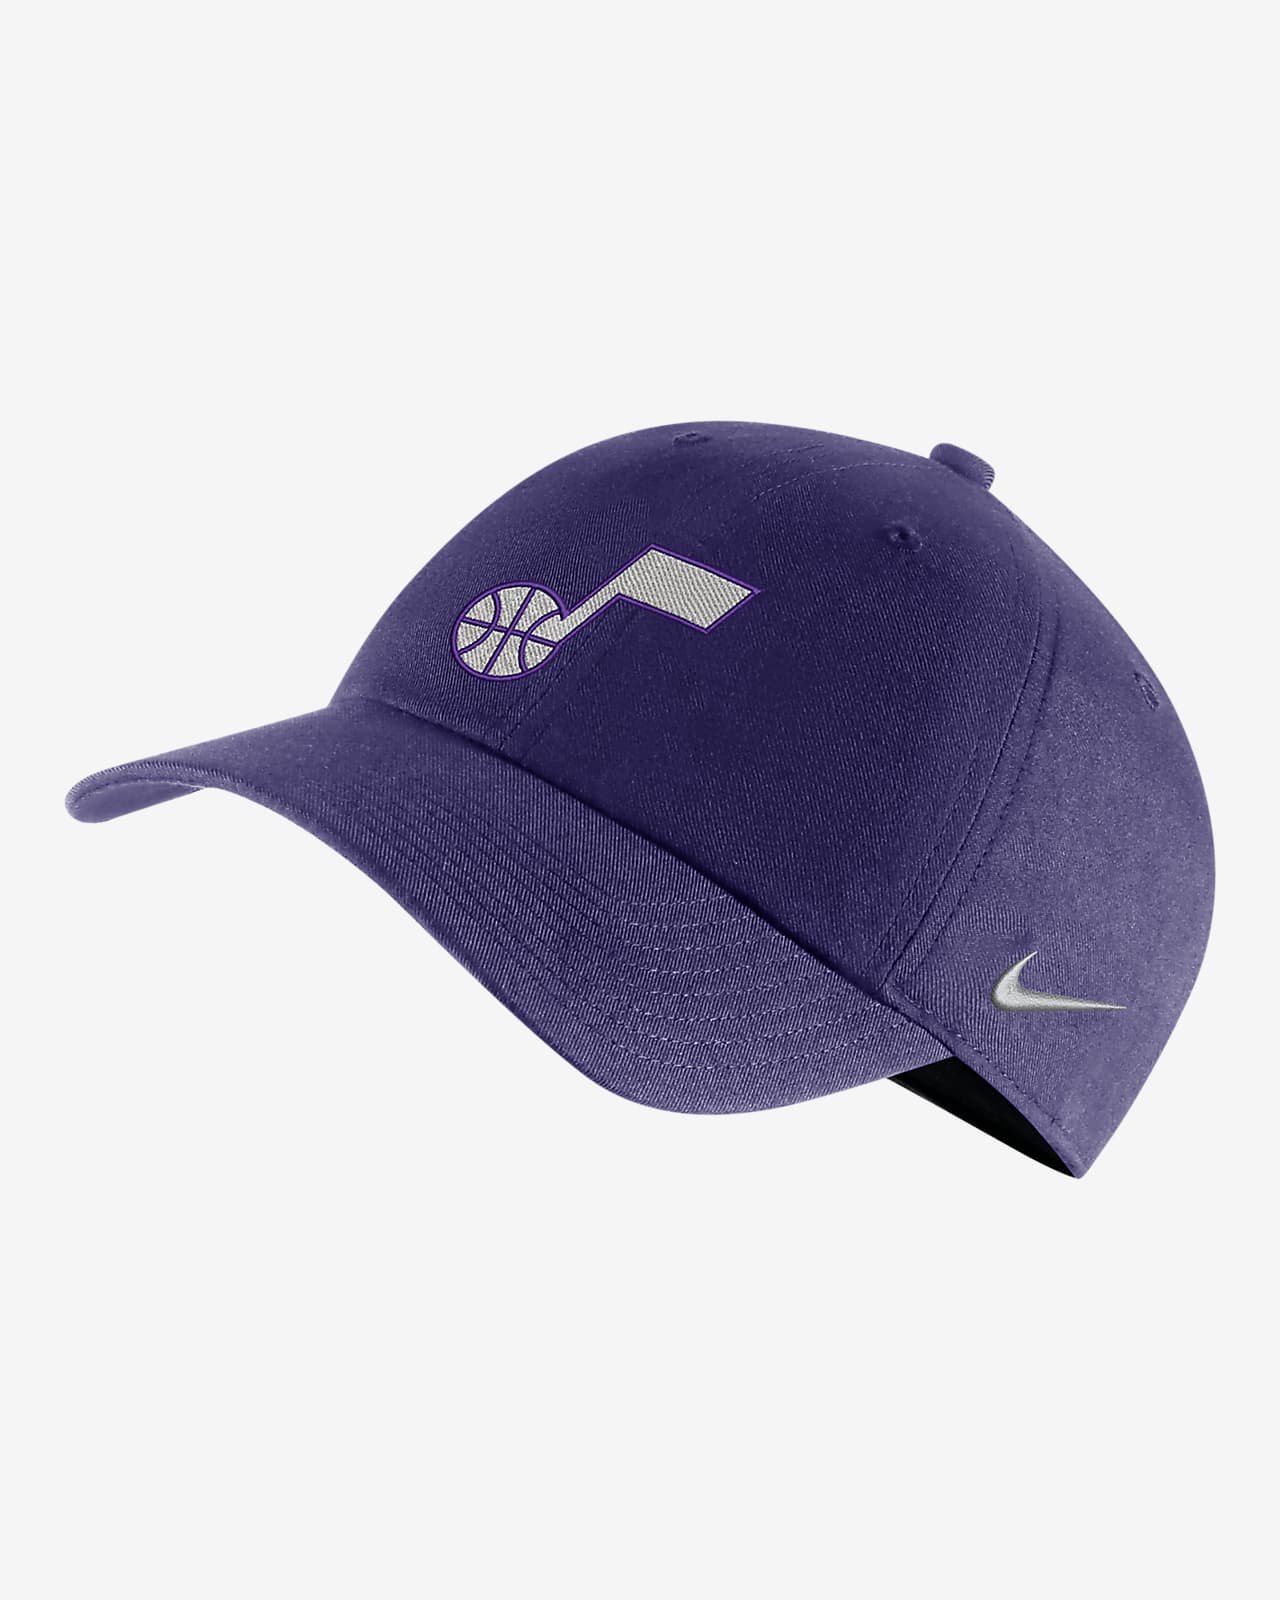 Utah Jazz City Edition Nike NBA Adjustable Cap